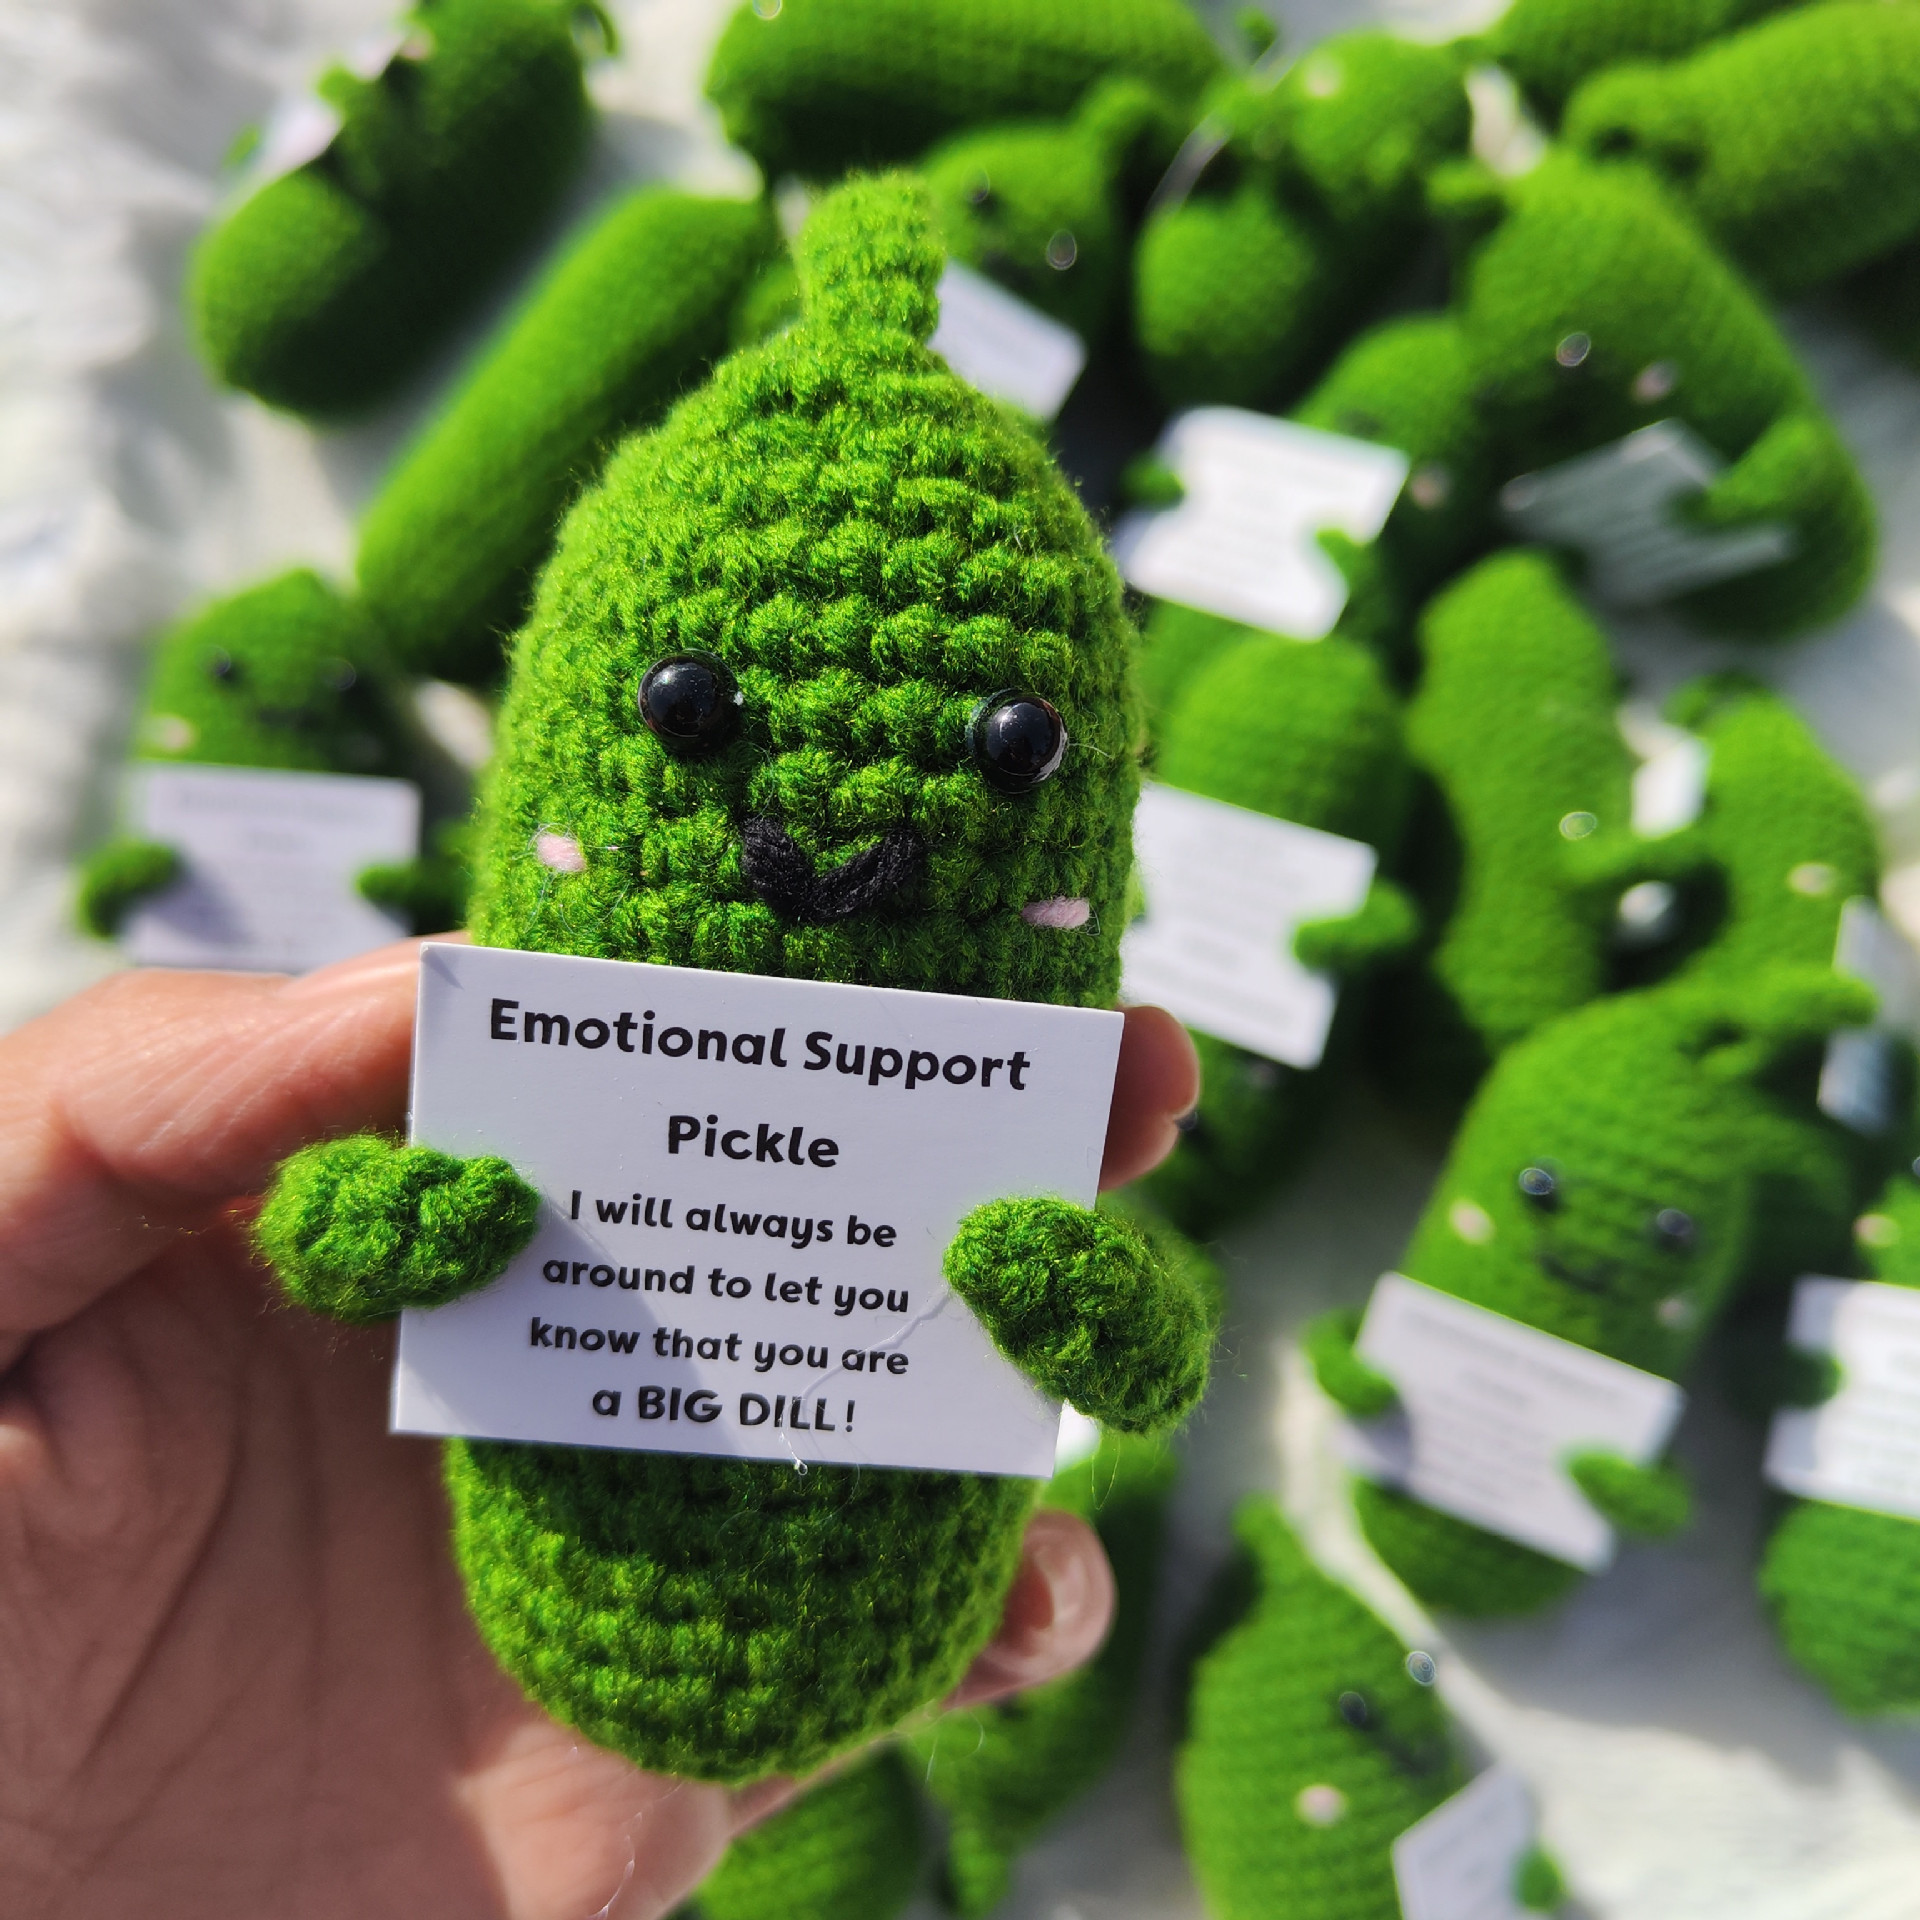 Handmade Emotional Support Pickled Cucumber Gift Handmade Crochet Emotional  Support Pickles Cute Crochet Pickled Cucumber - AliExpress